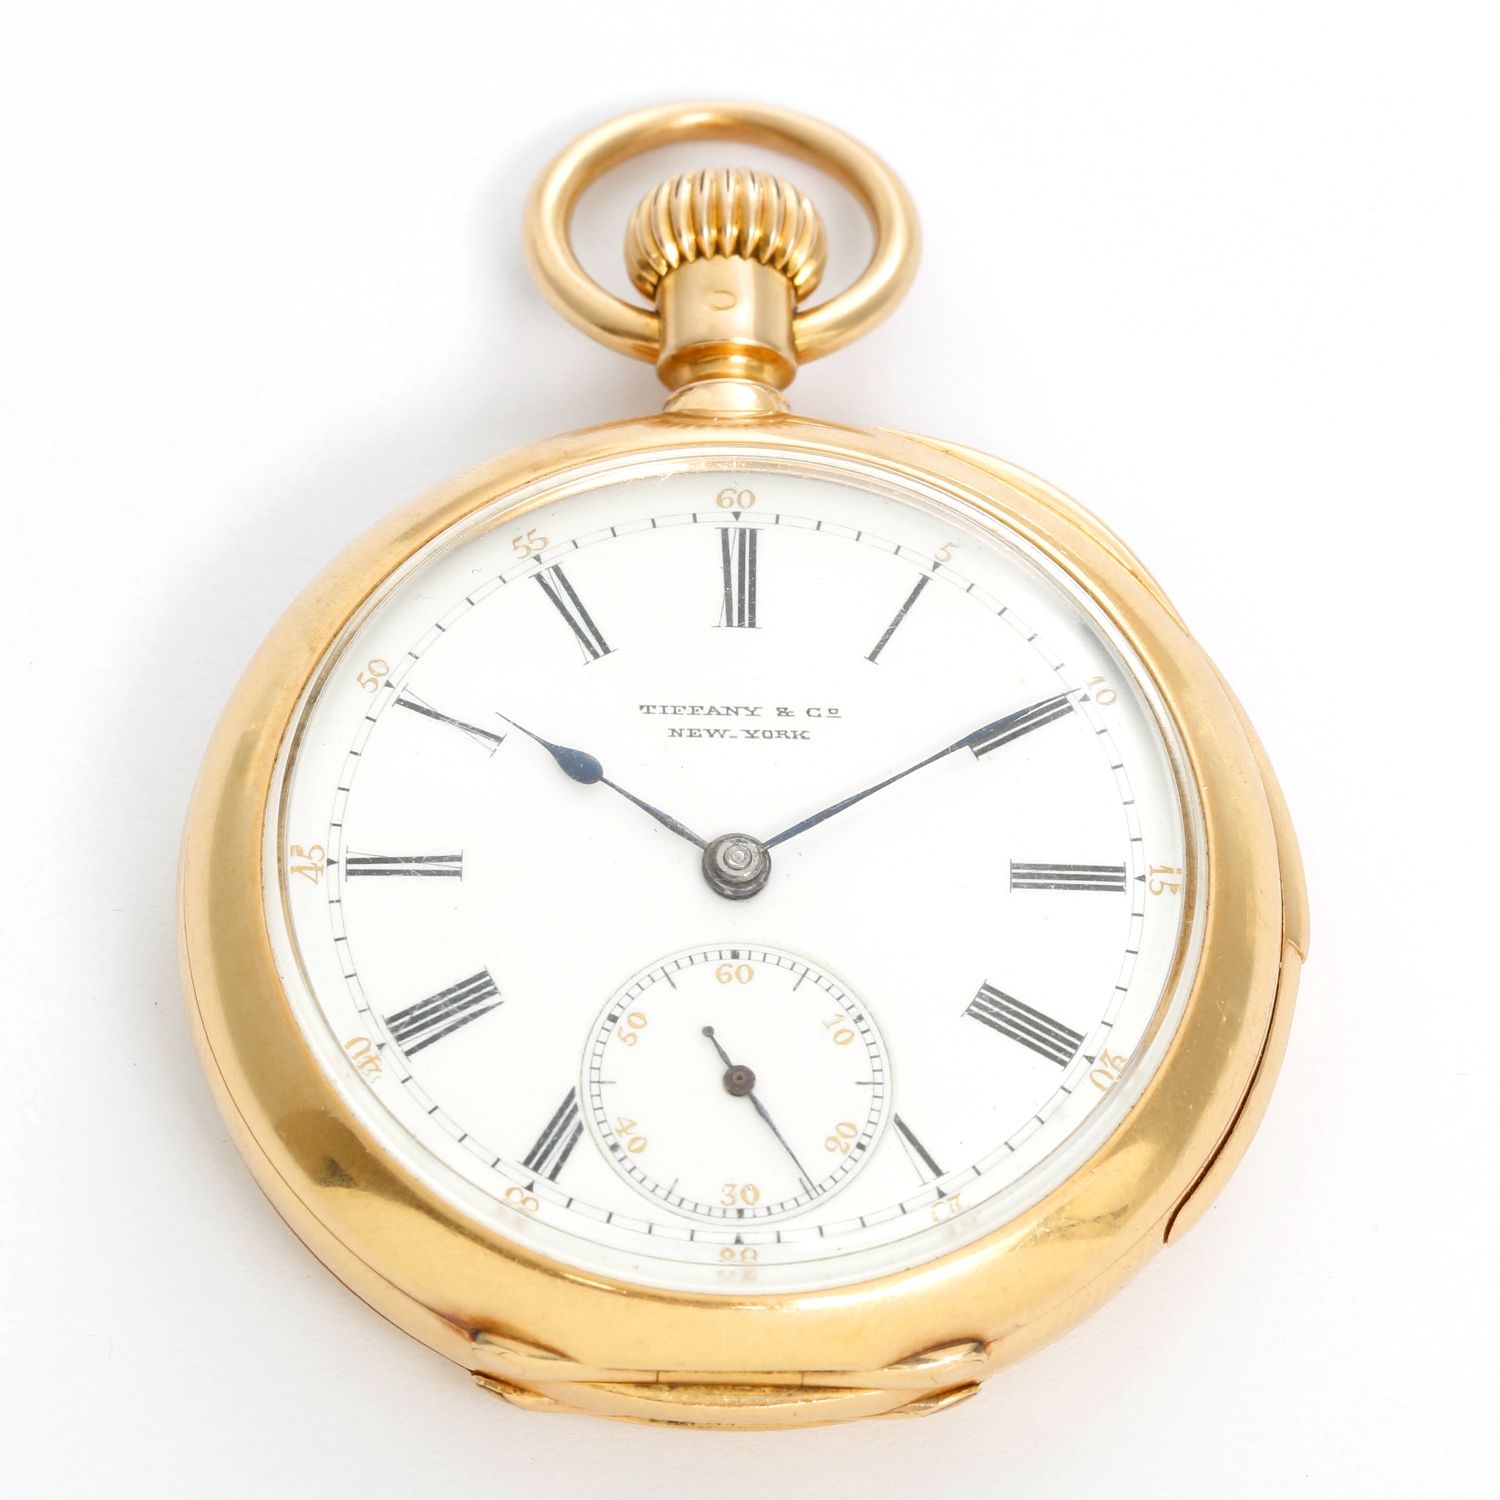 Antique Patek Philippe & Co Geneve Pocket Watch in 18k Rose Gold